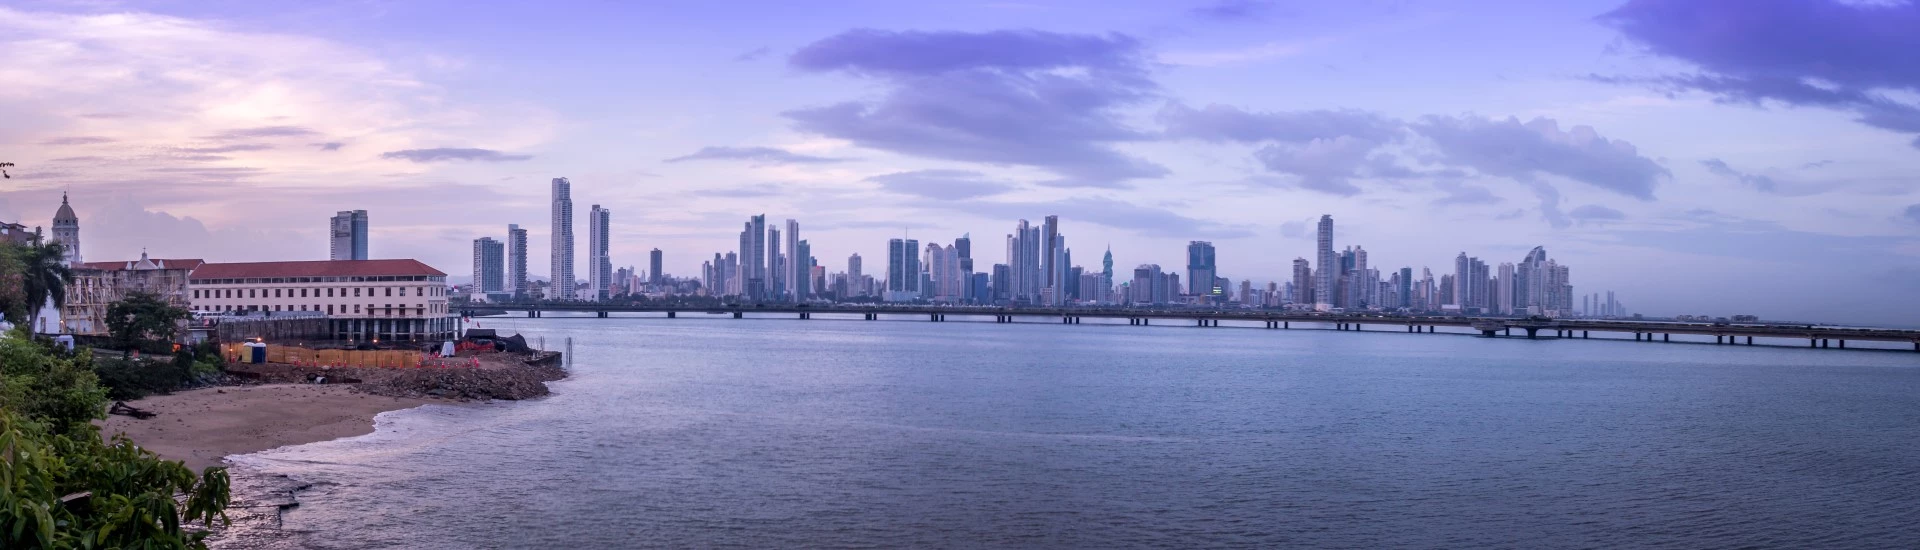 Panama City Skyline - view over Panama Bay